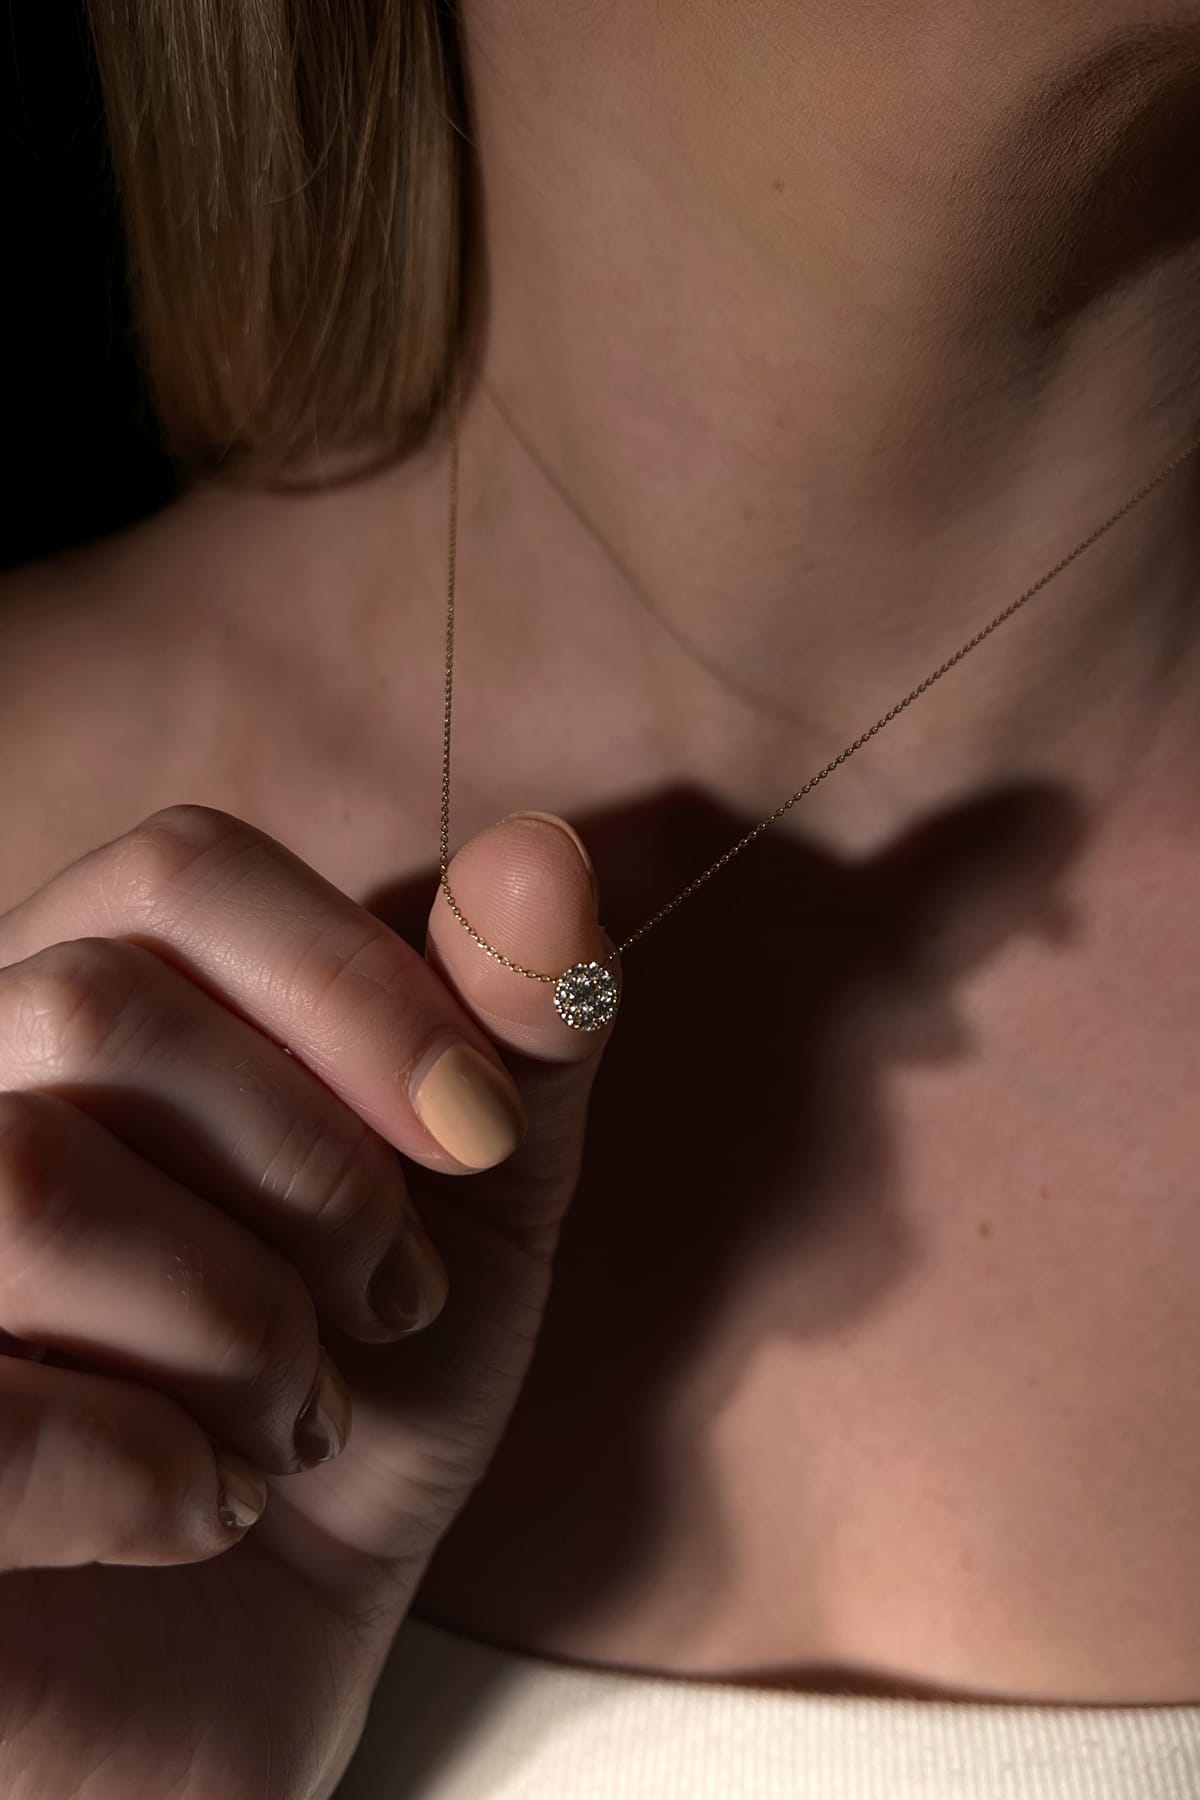 Tessa Diamond Circle Pendant From Hearts On Fire available at LeGassick Diamonds and Jewellery Gold Coast, Australia.